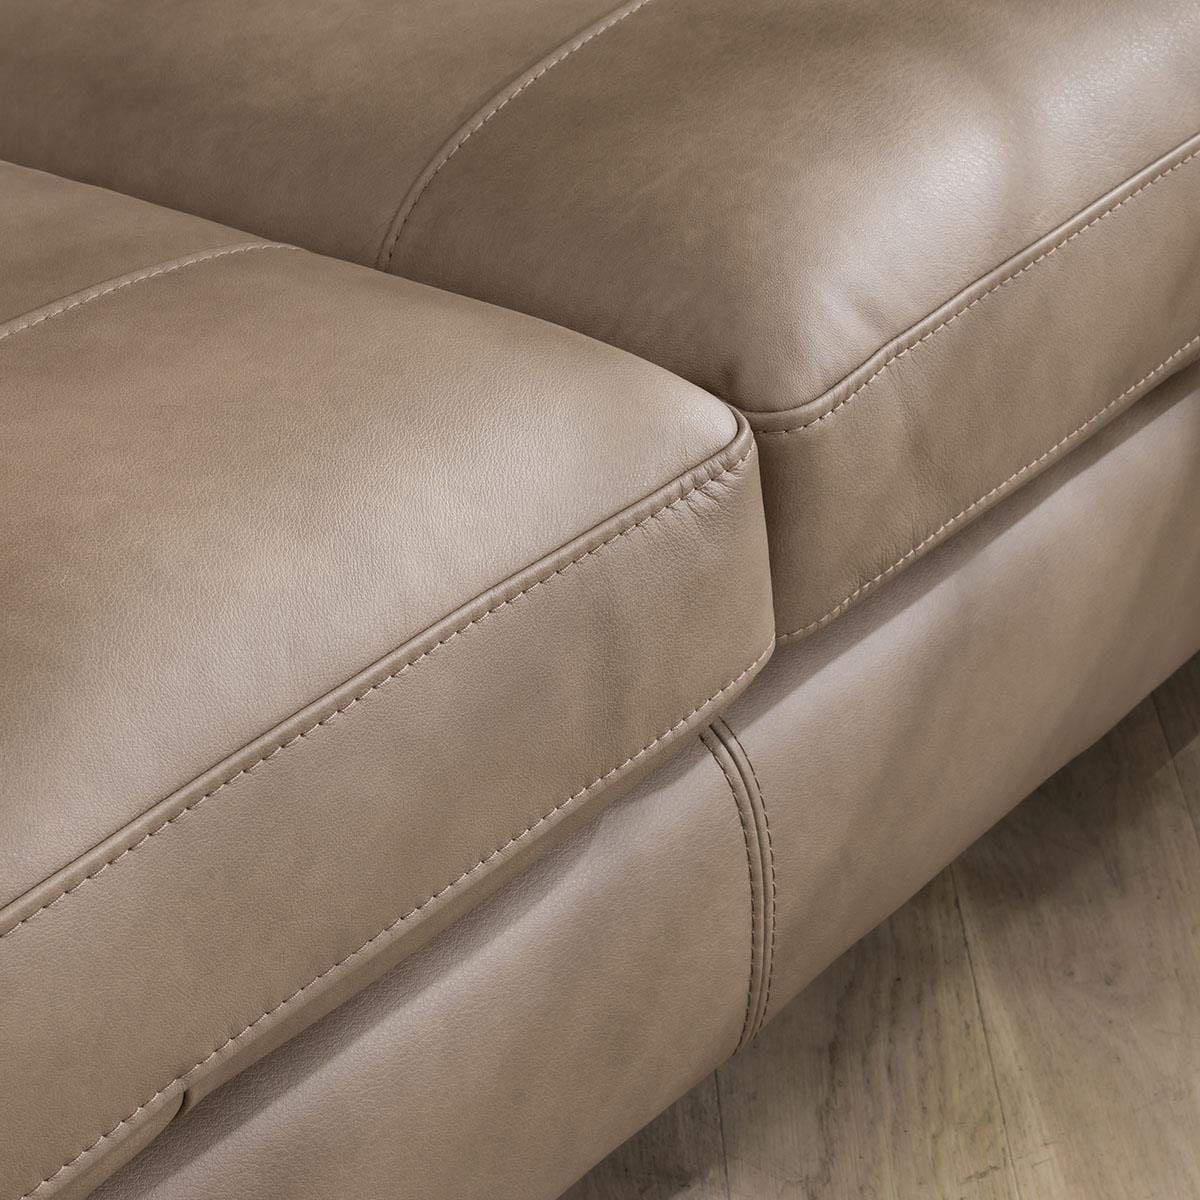 Quatropi Modern 2 Seater Leather Sofa - Premium Real Leather Custom Options - 181cm